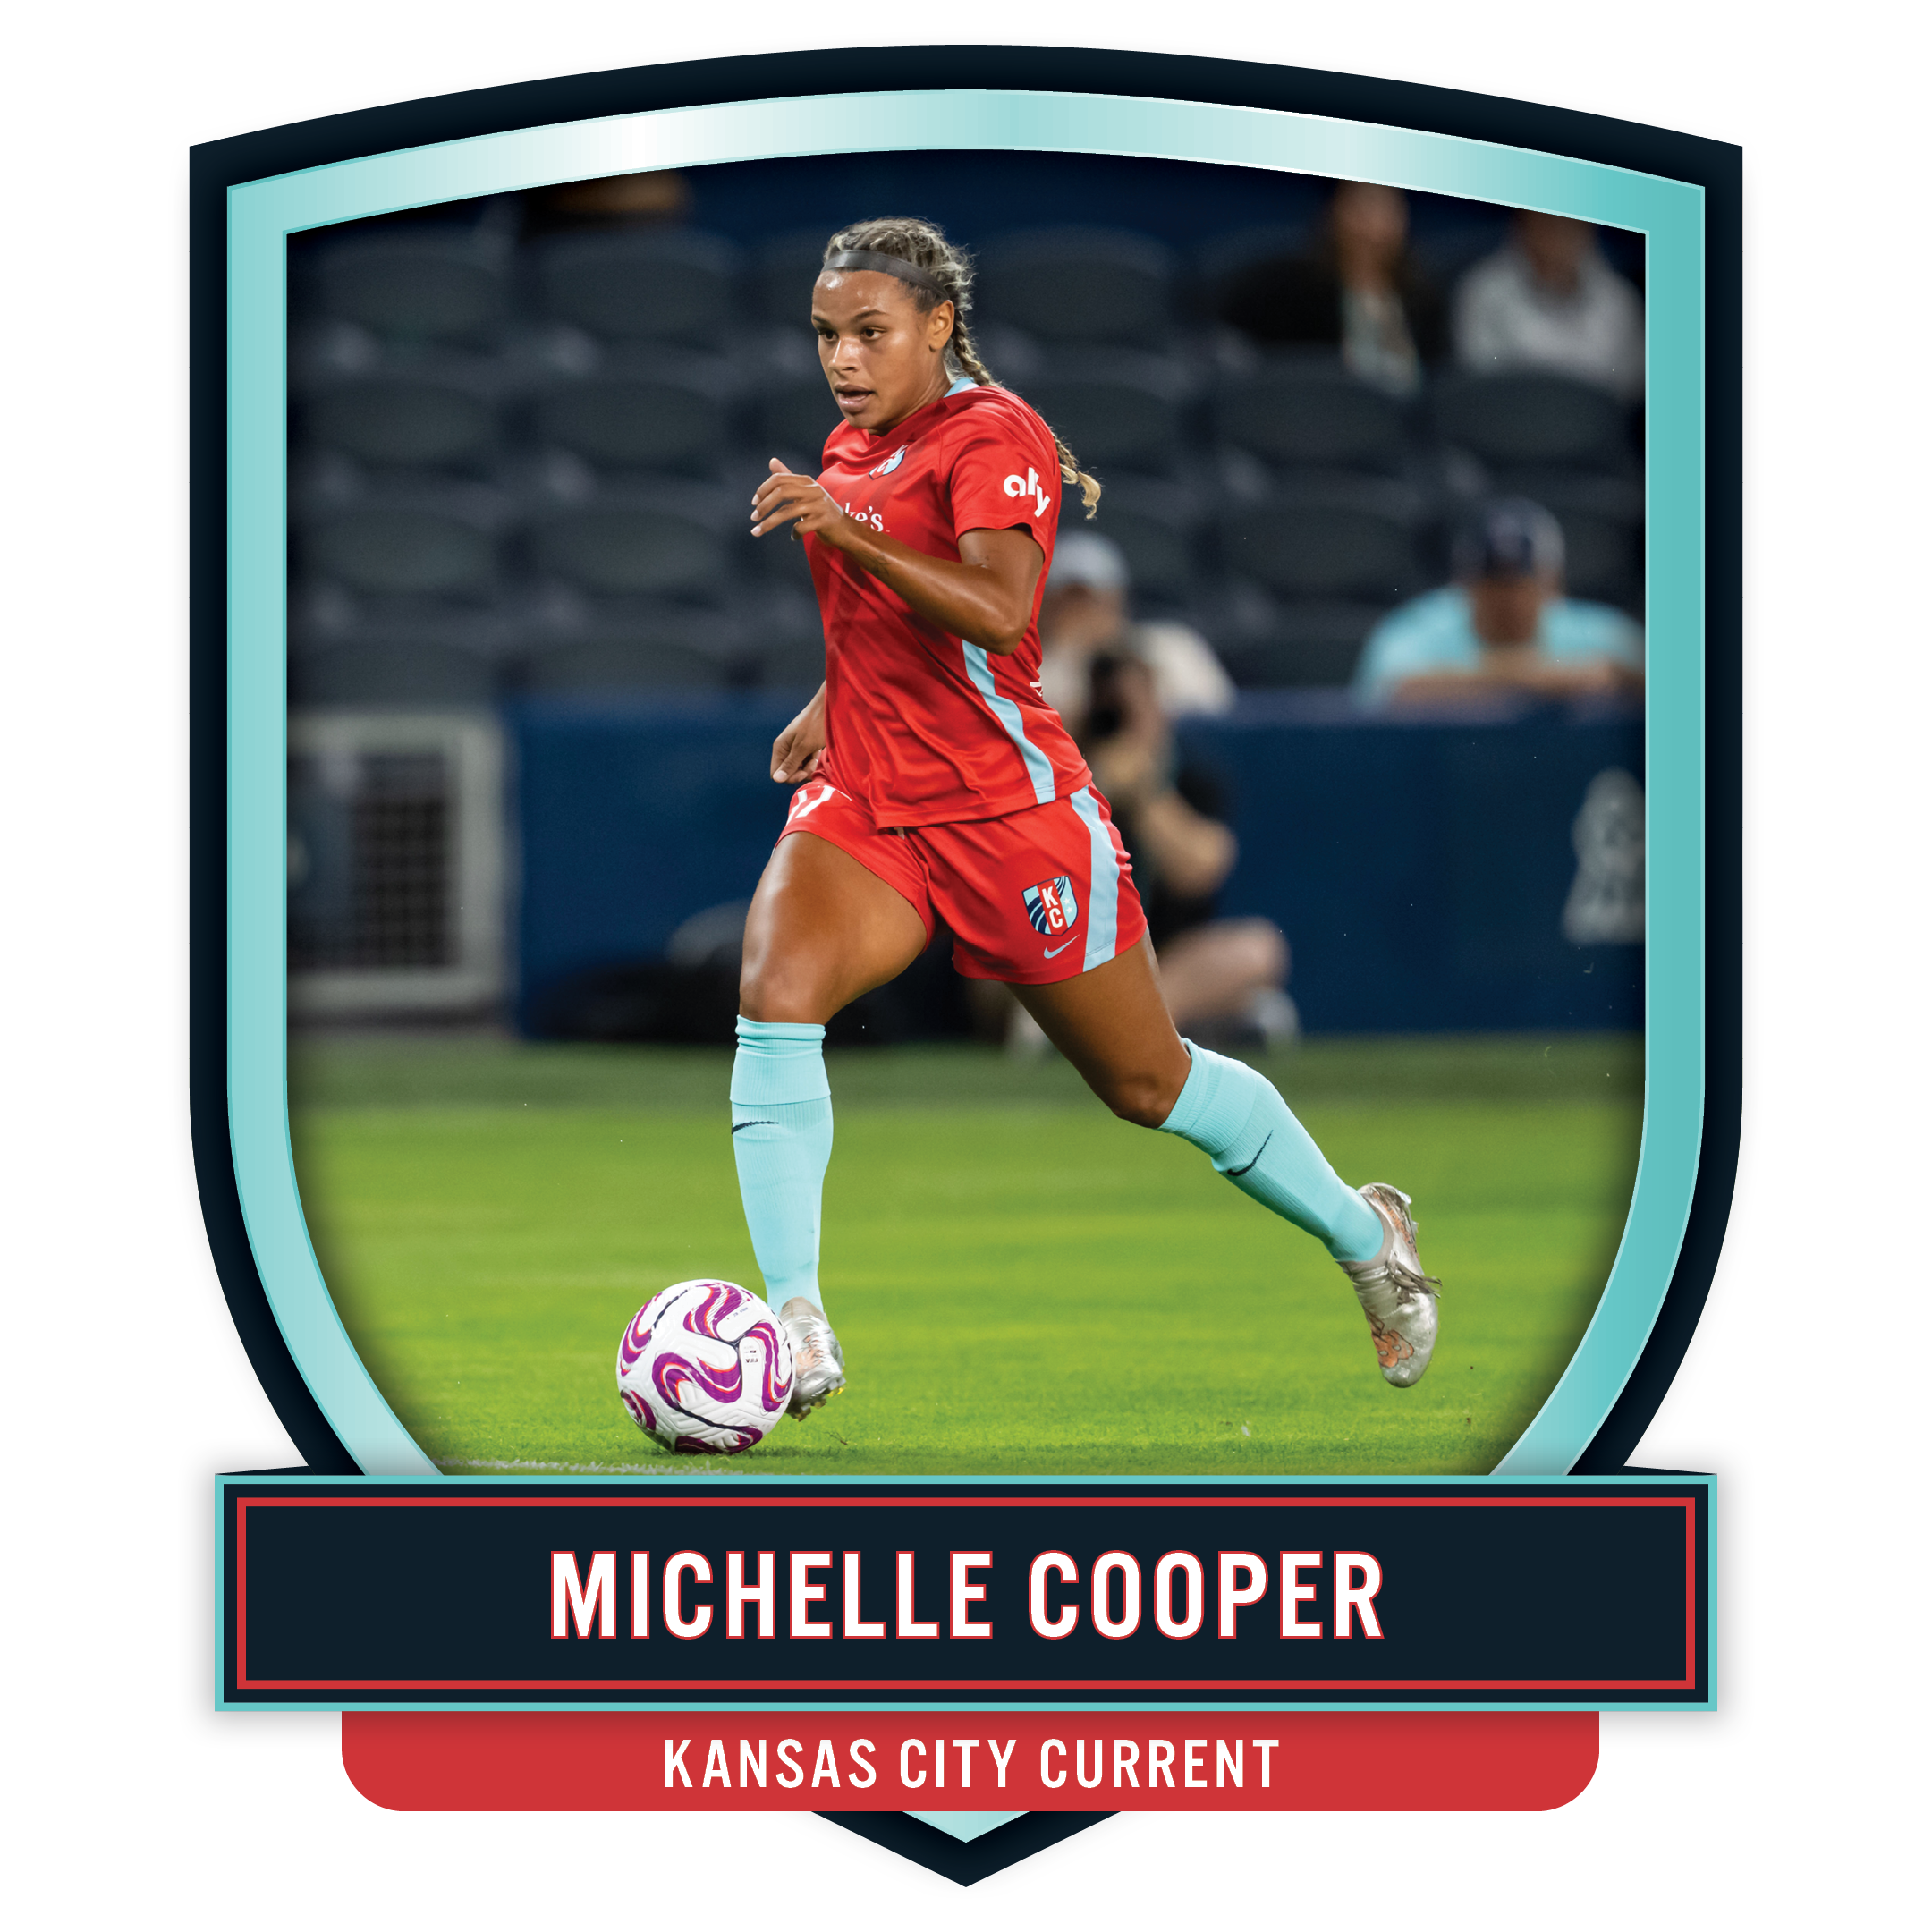 Michelle Cooper asset